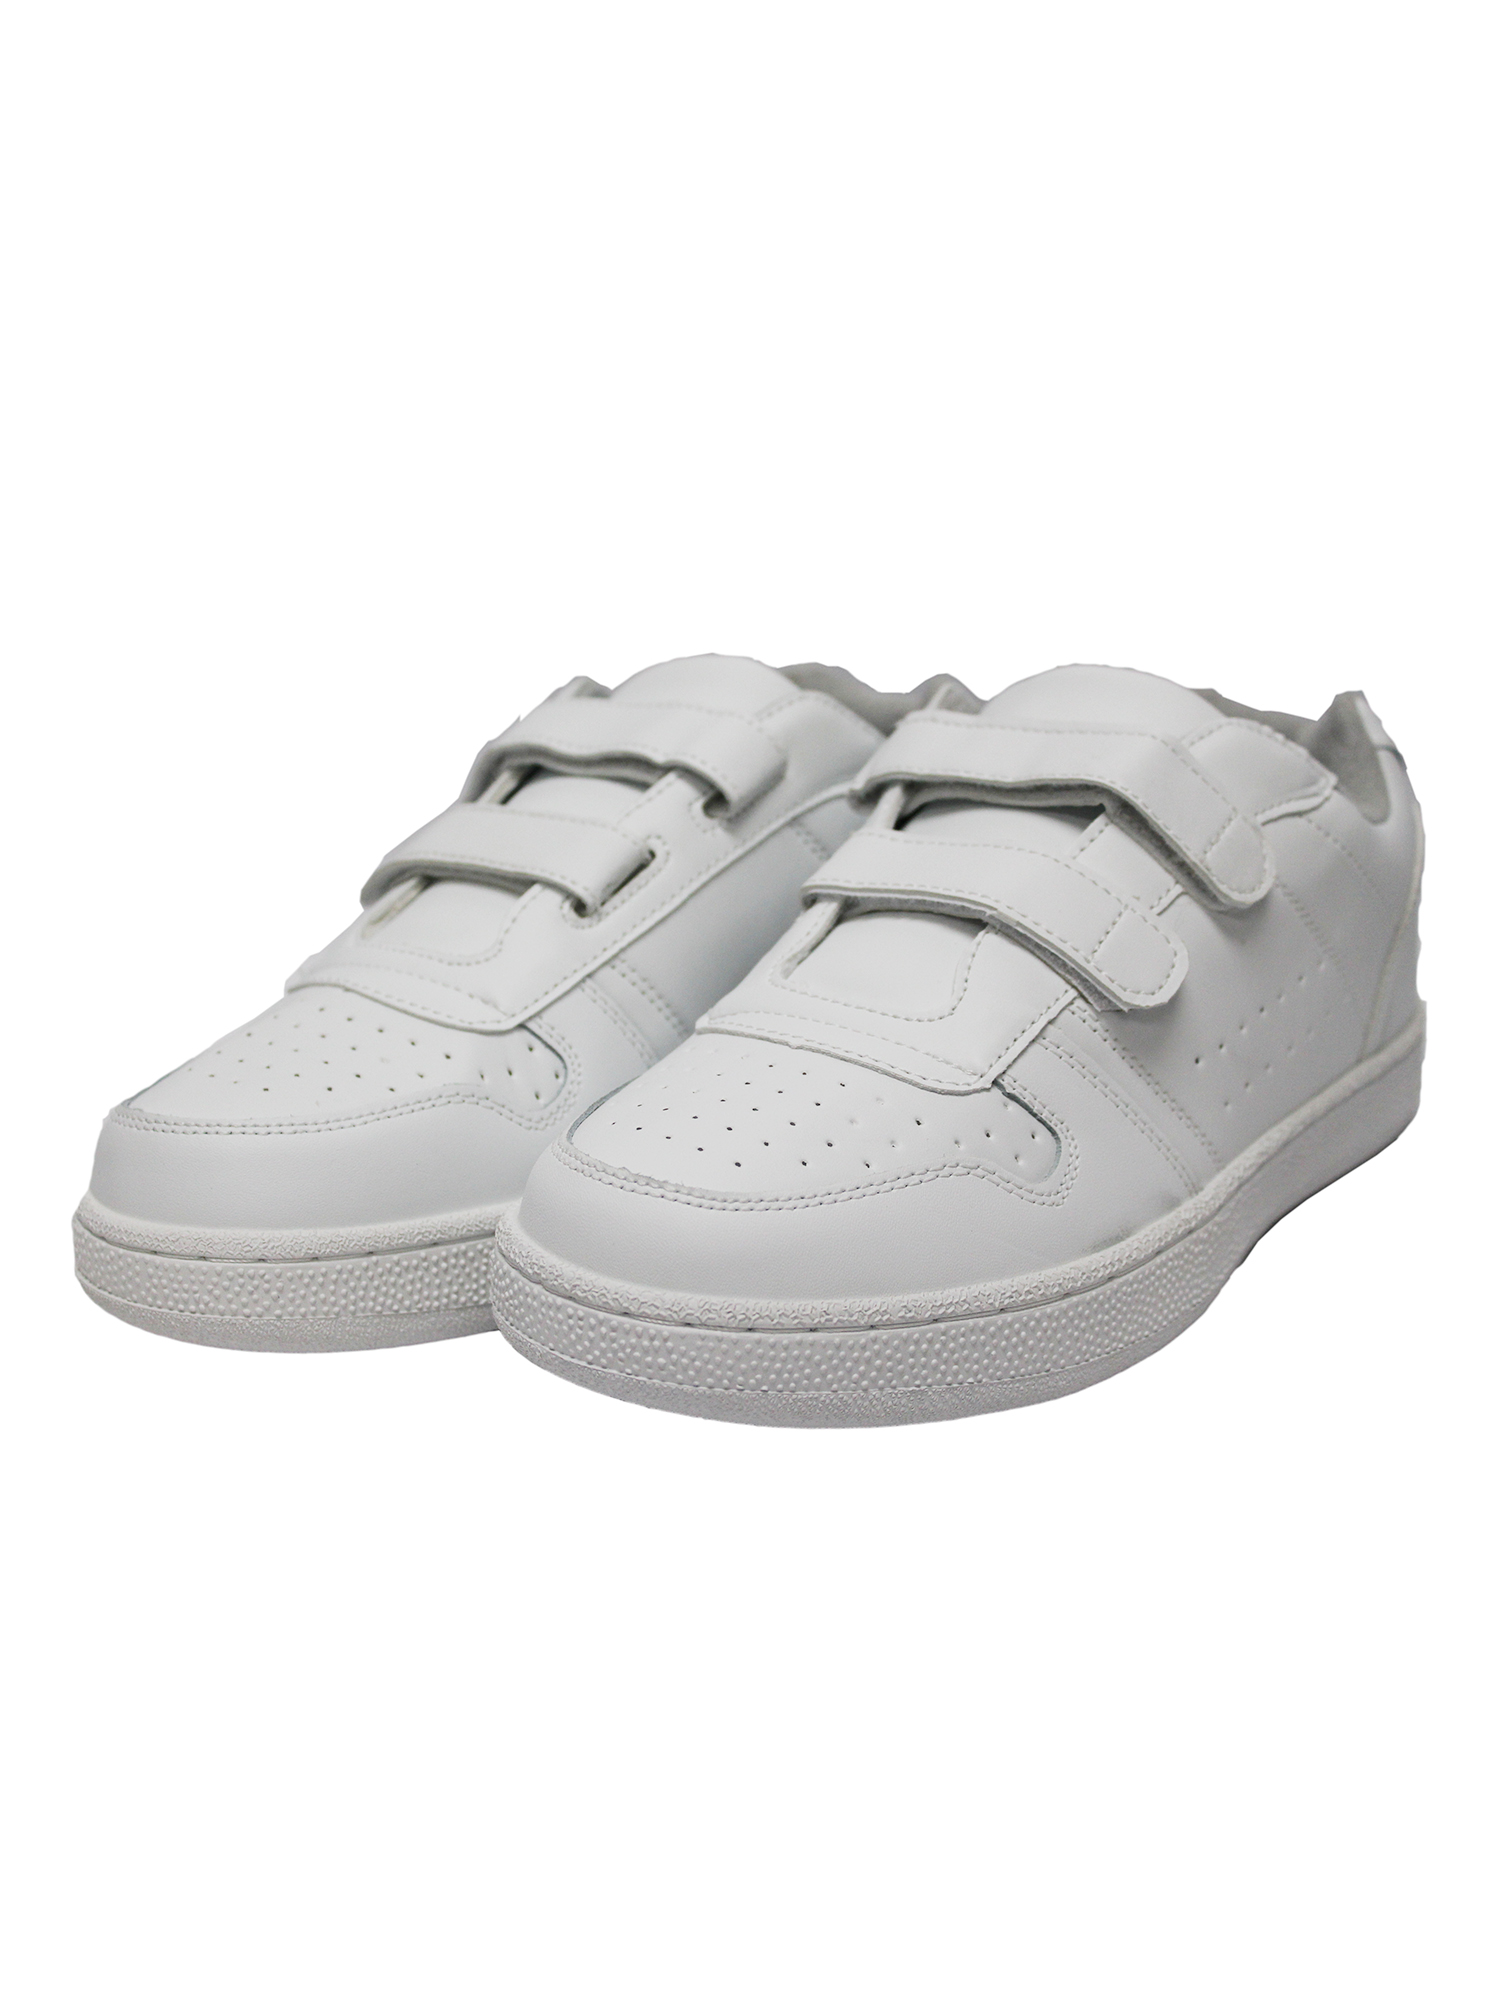 Tanleewa Men's Leather Strap Sneakers Lightweight Hook and Loop Walking Shoe Size 12 Adult Male - image 2 of 5